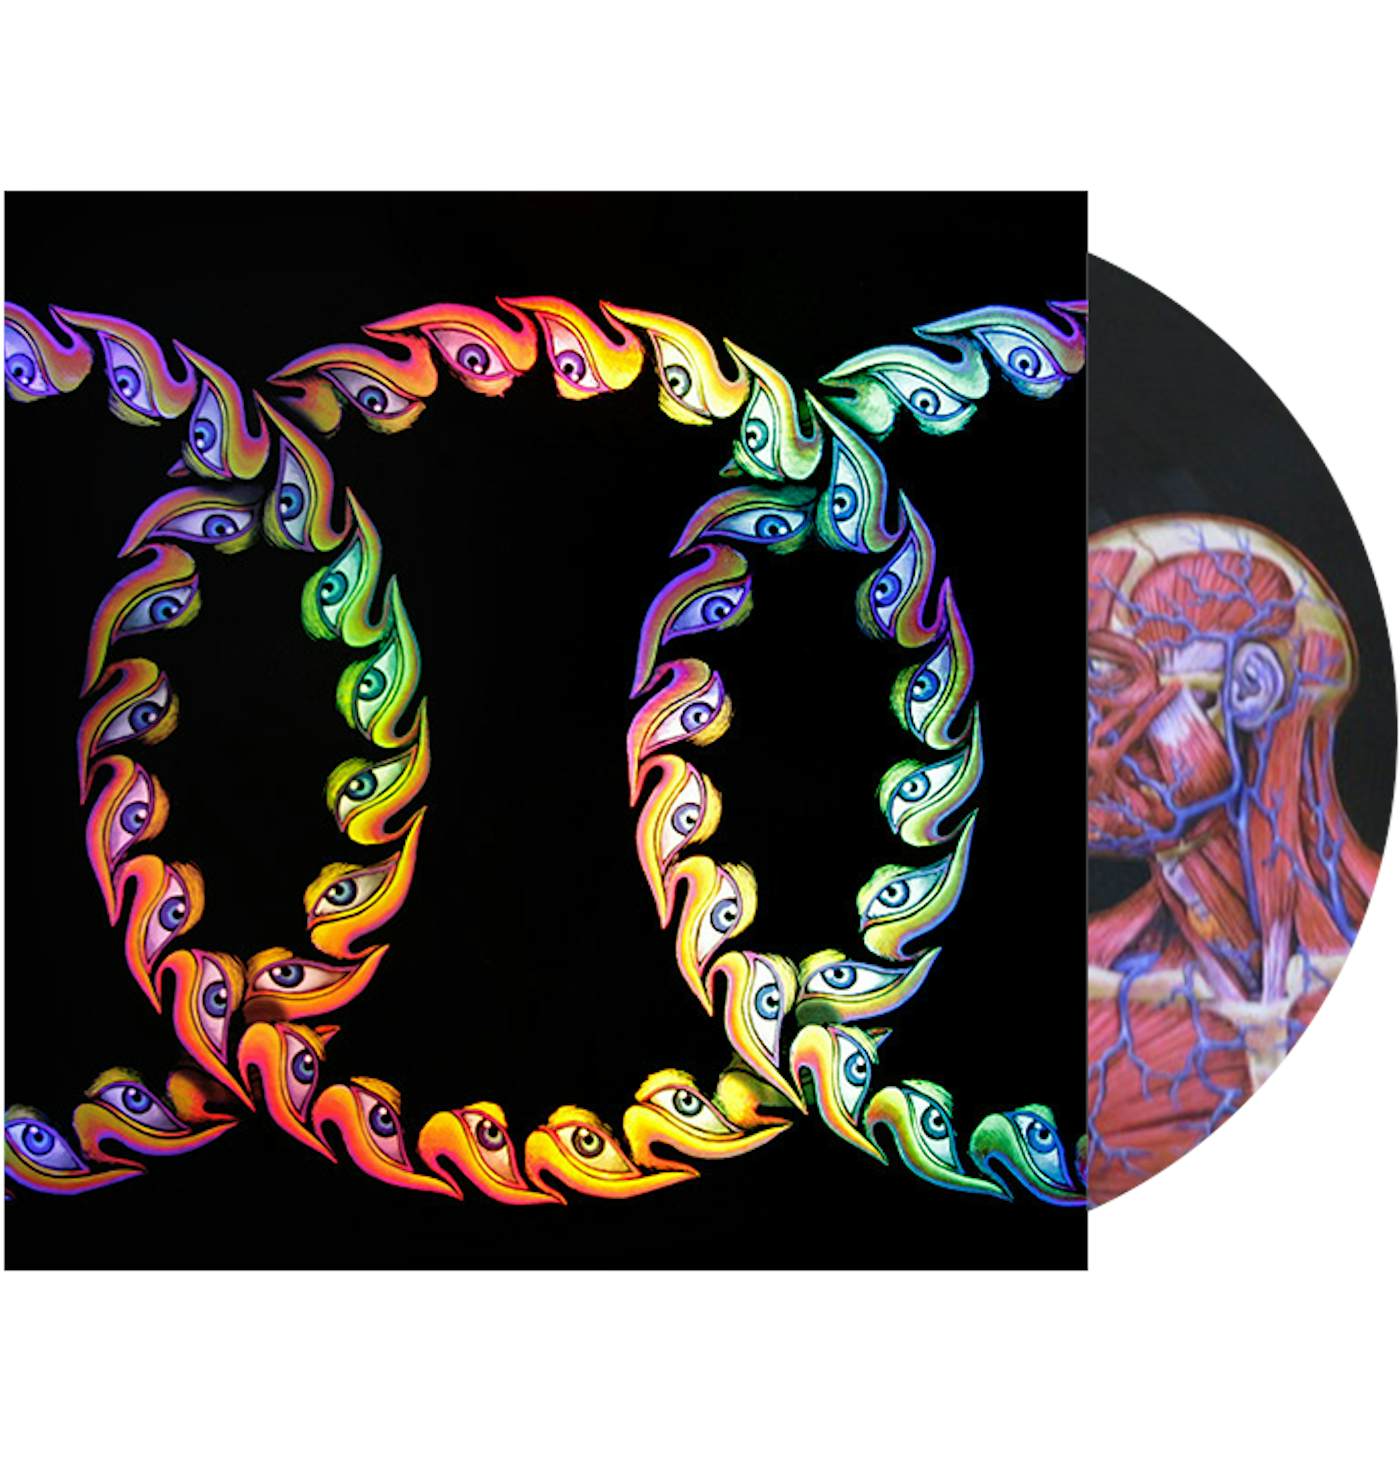 TOOL - 'Lateralus' 2xLP (Vinyl)